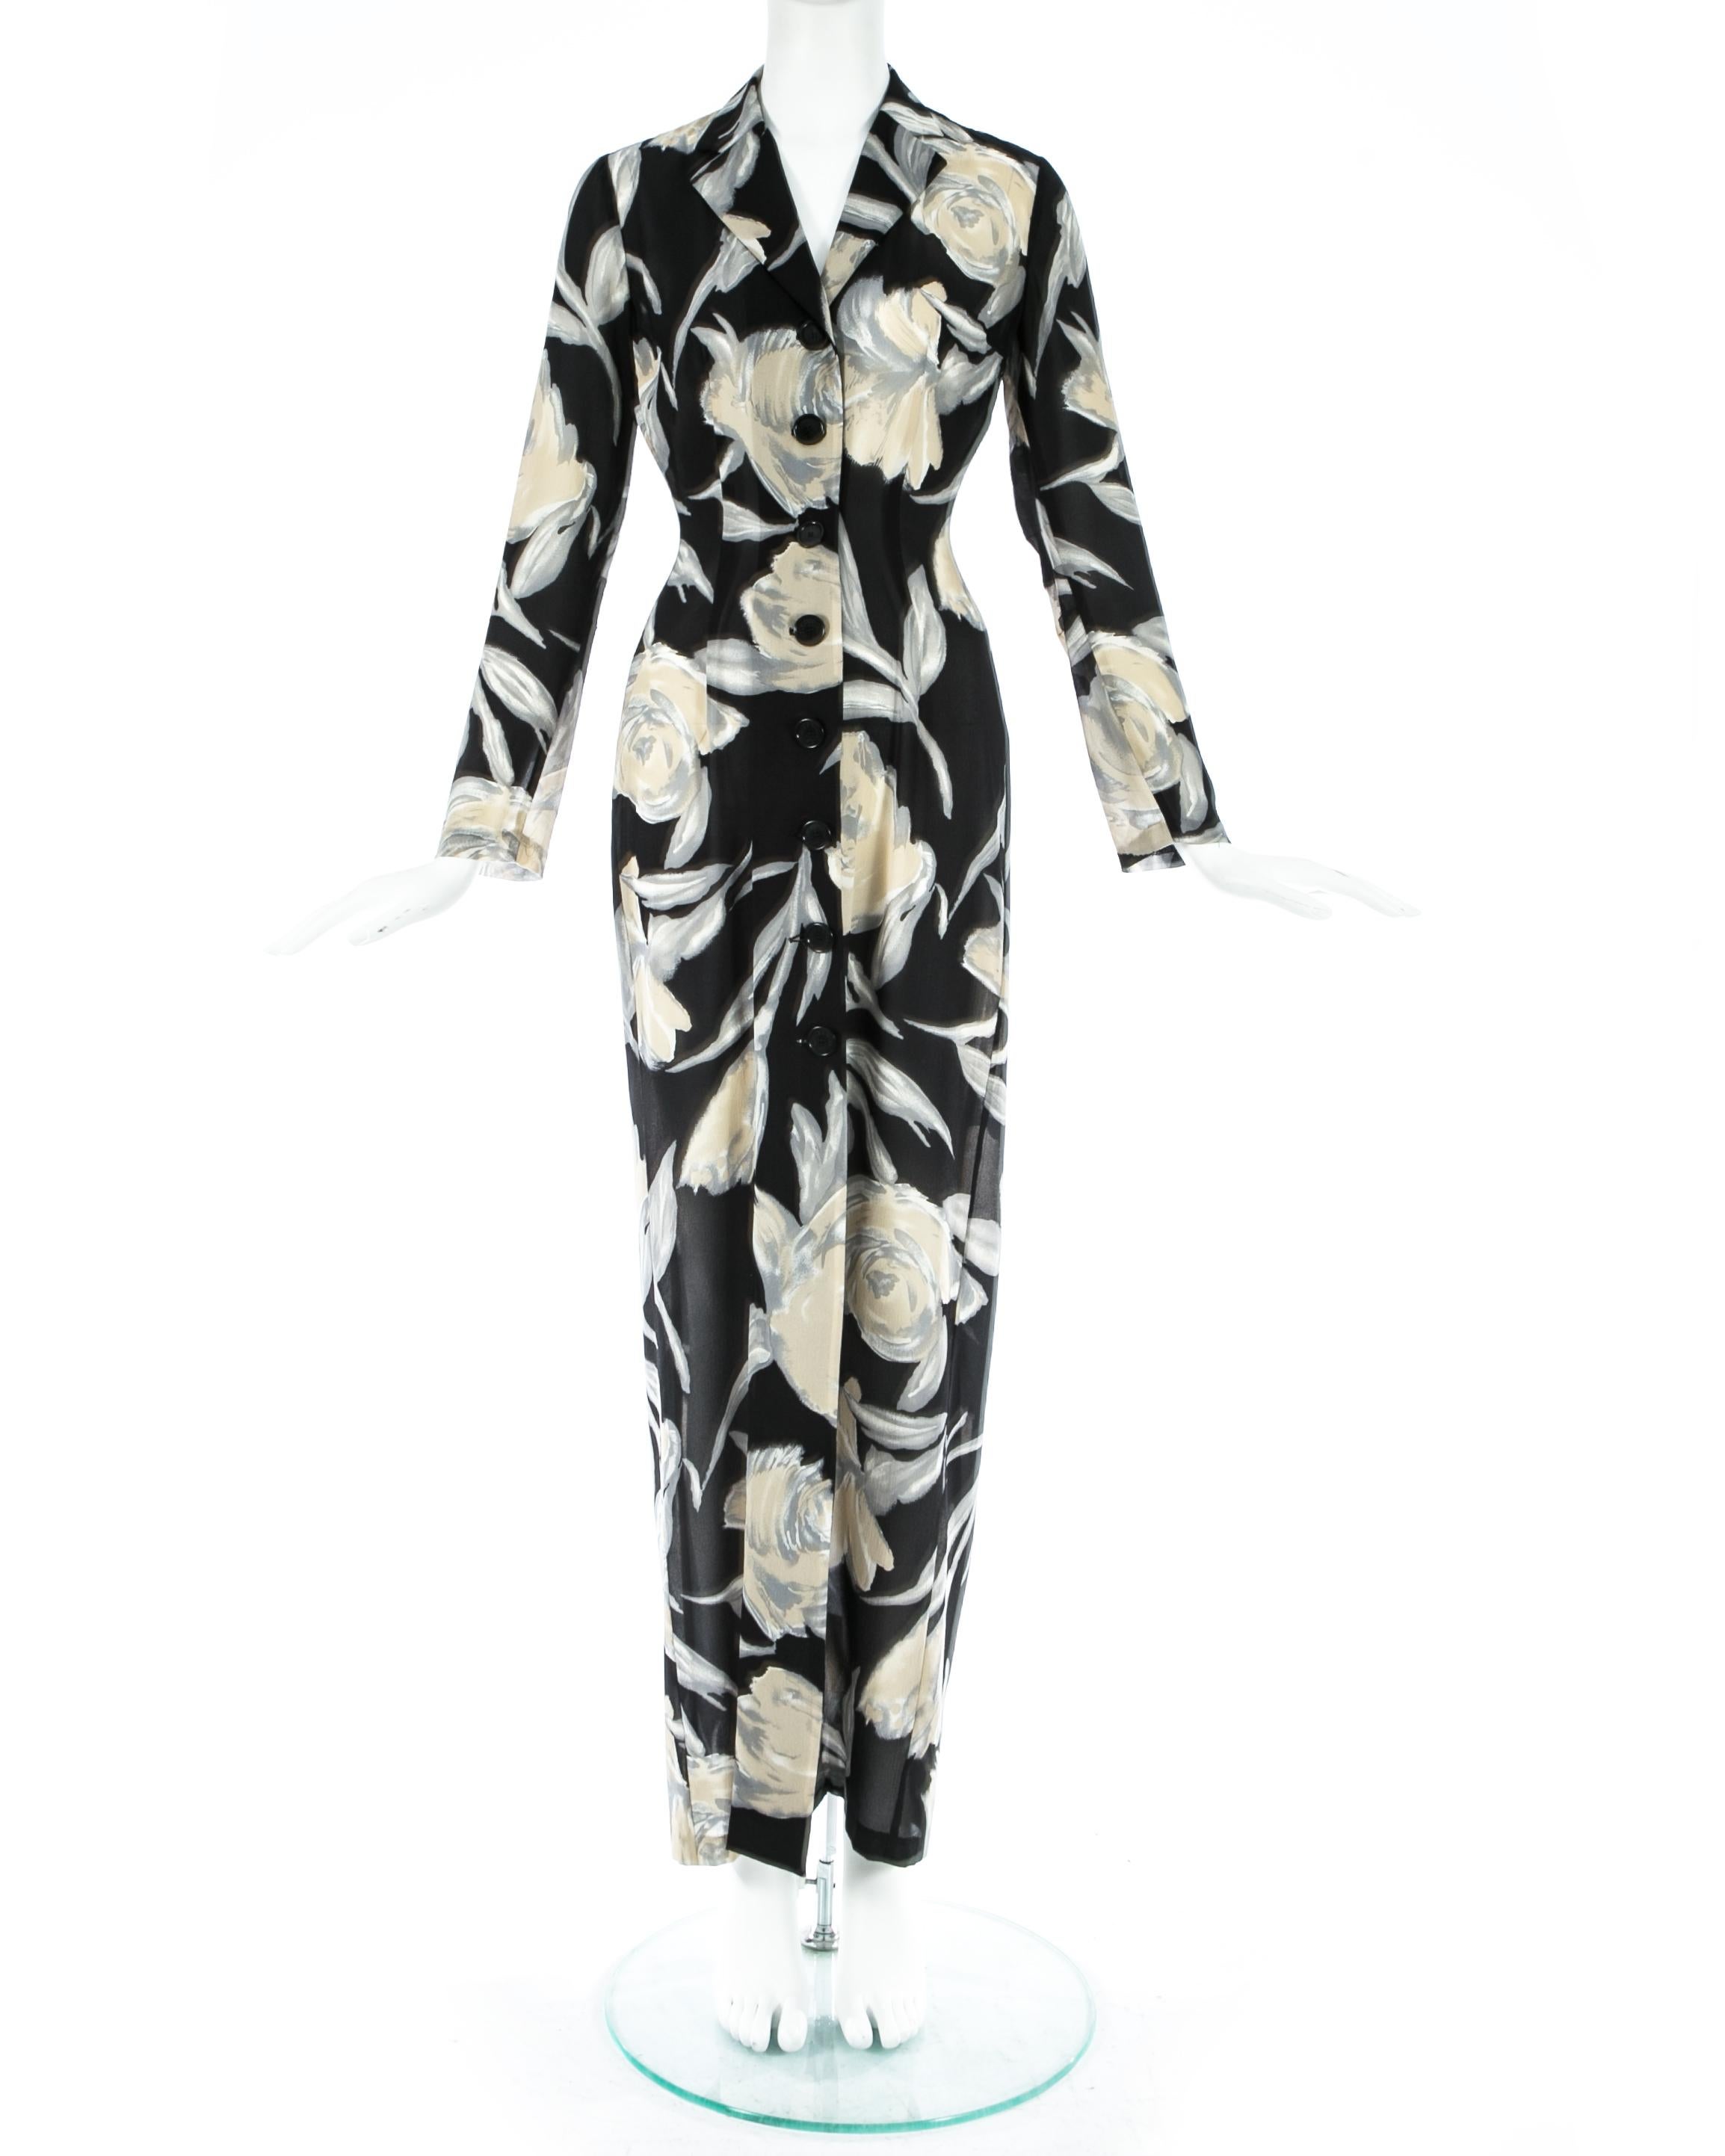 Dolce & Gabbana black and cream silk floral shirt dress

Spring-Summer 1997